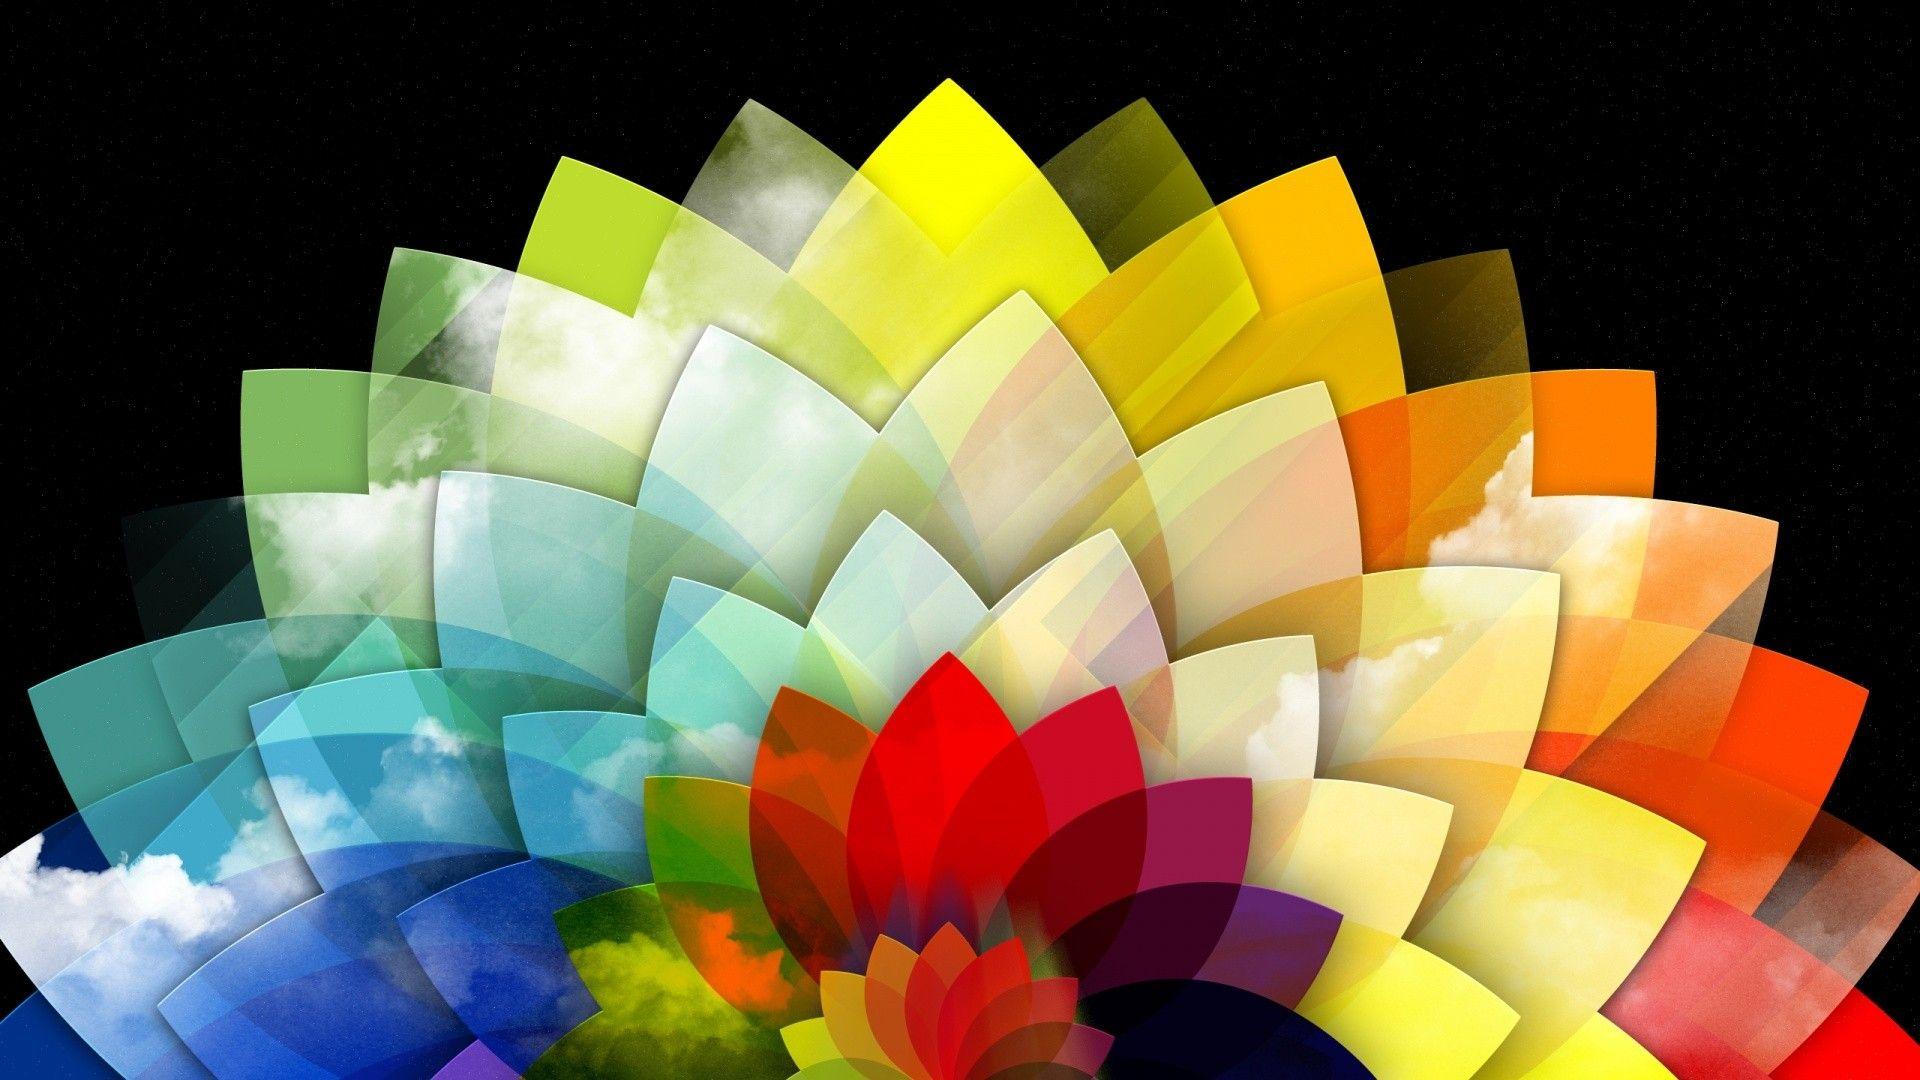 Multi Color Flower HD Wallpaper 1920x1080p wallpaper download